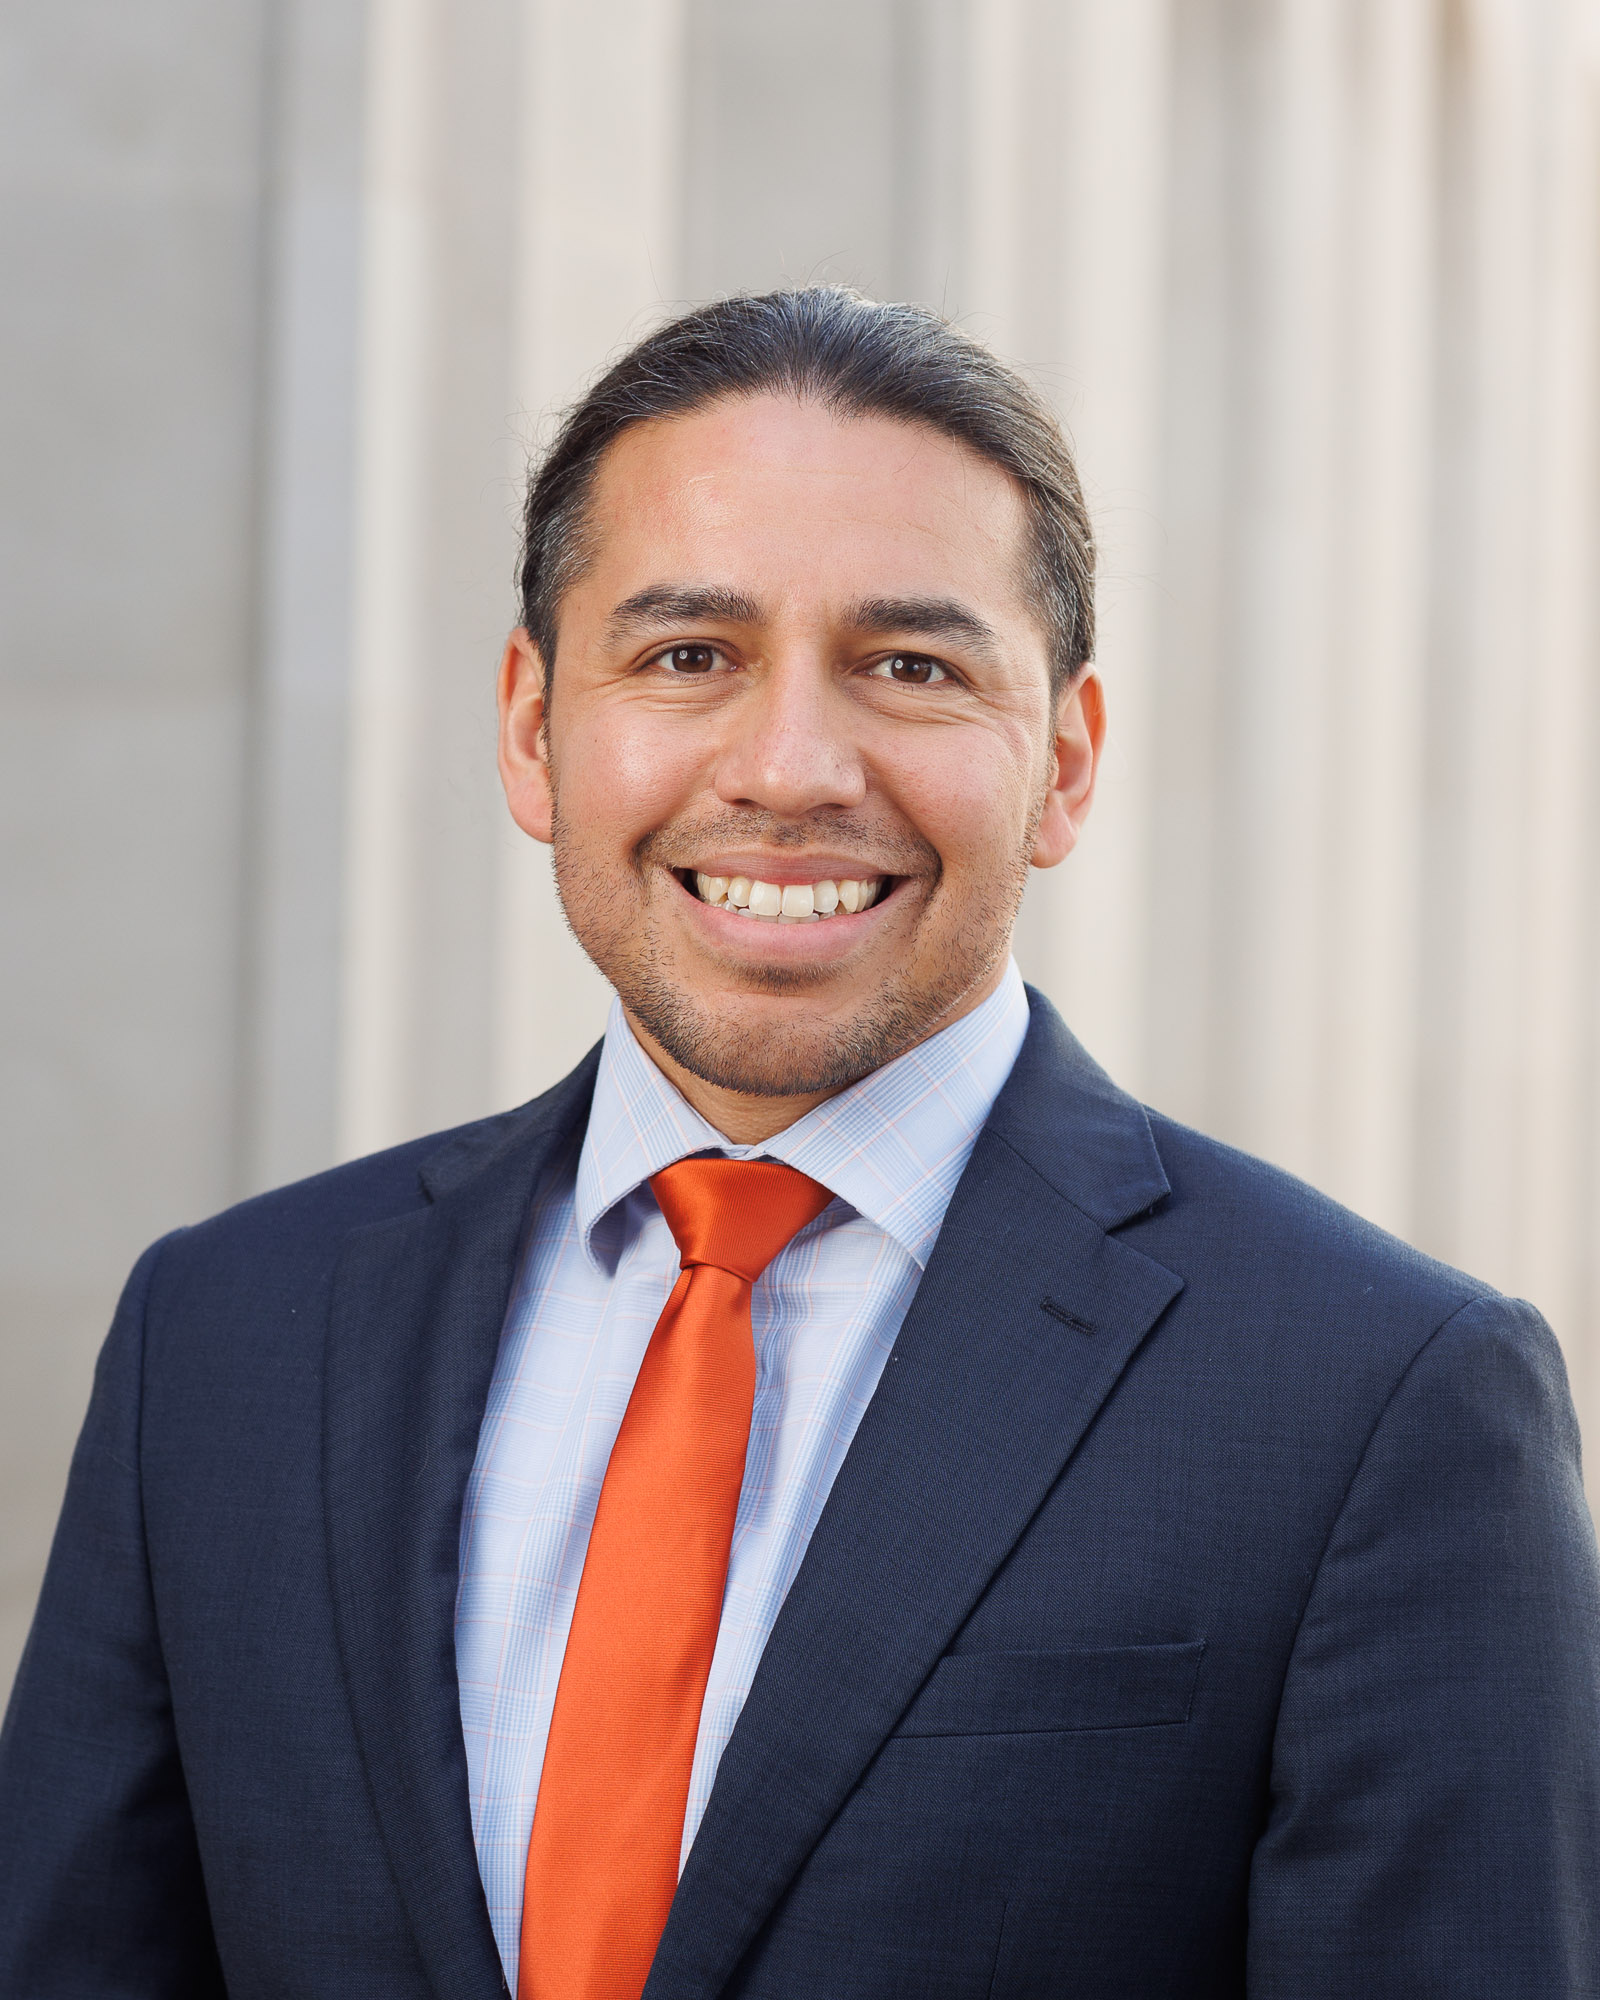 Portrait of Michael Morales wearing suit and tie